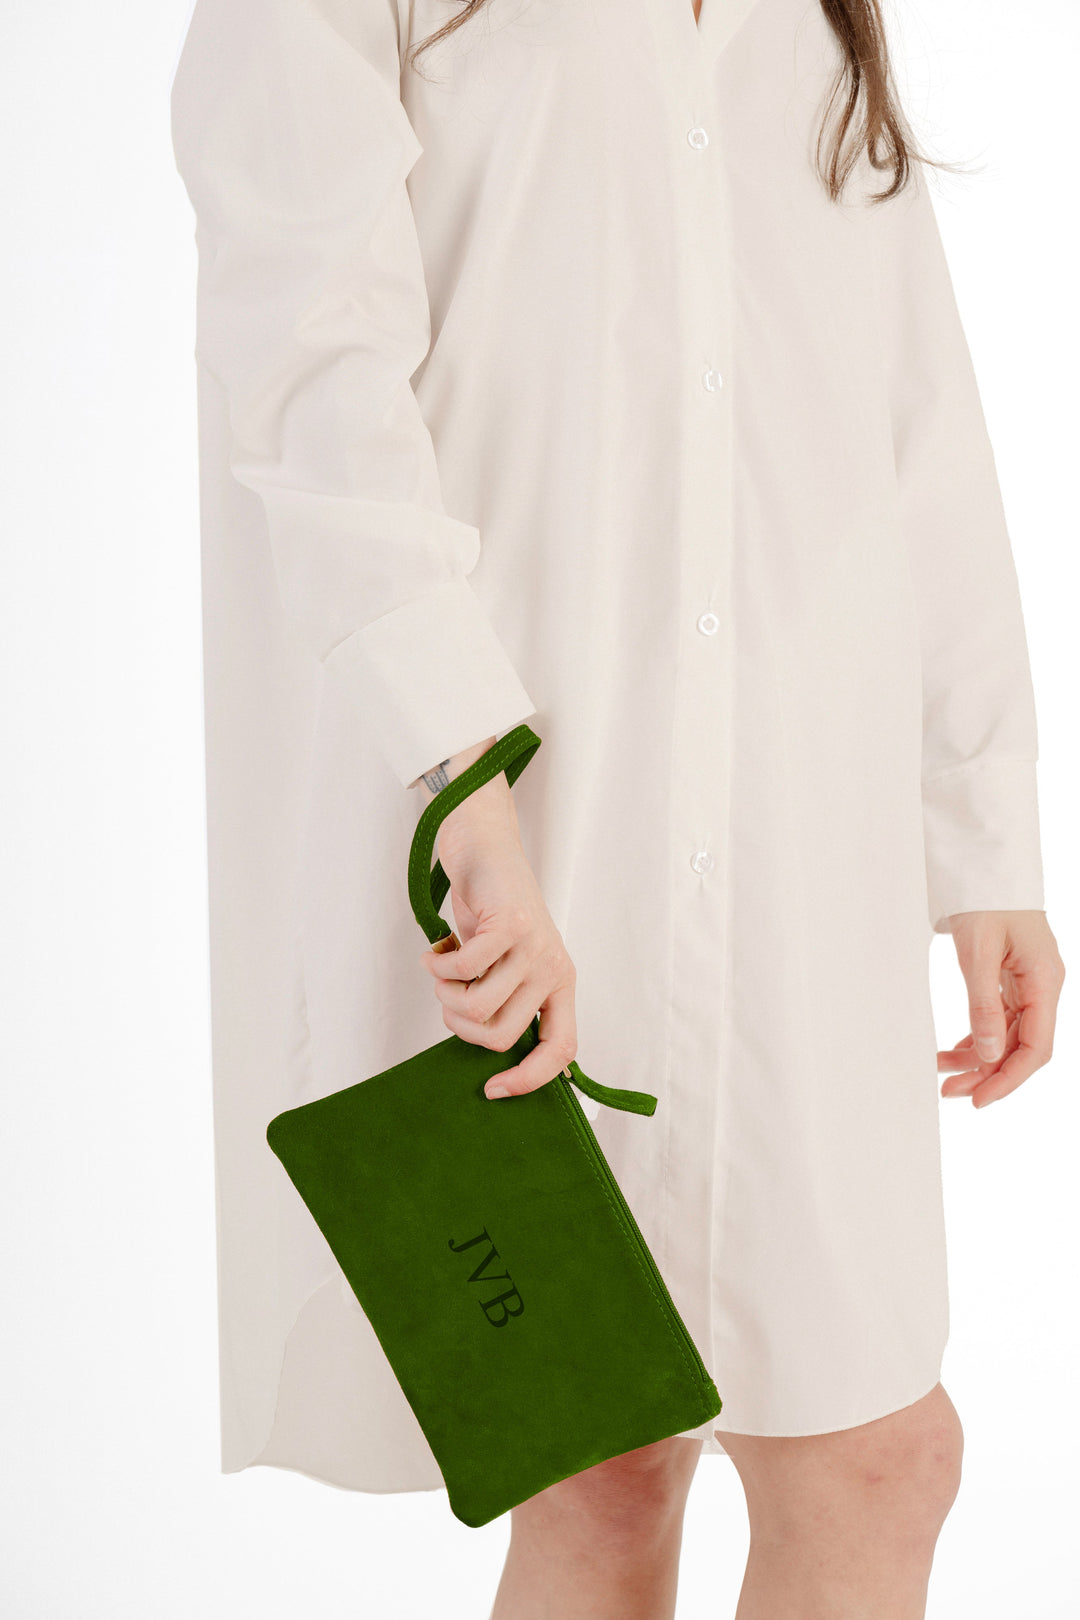 Woman holding a green monogrammed clutch bag wearing a white shirt dress